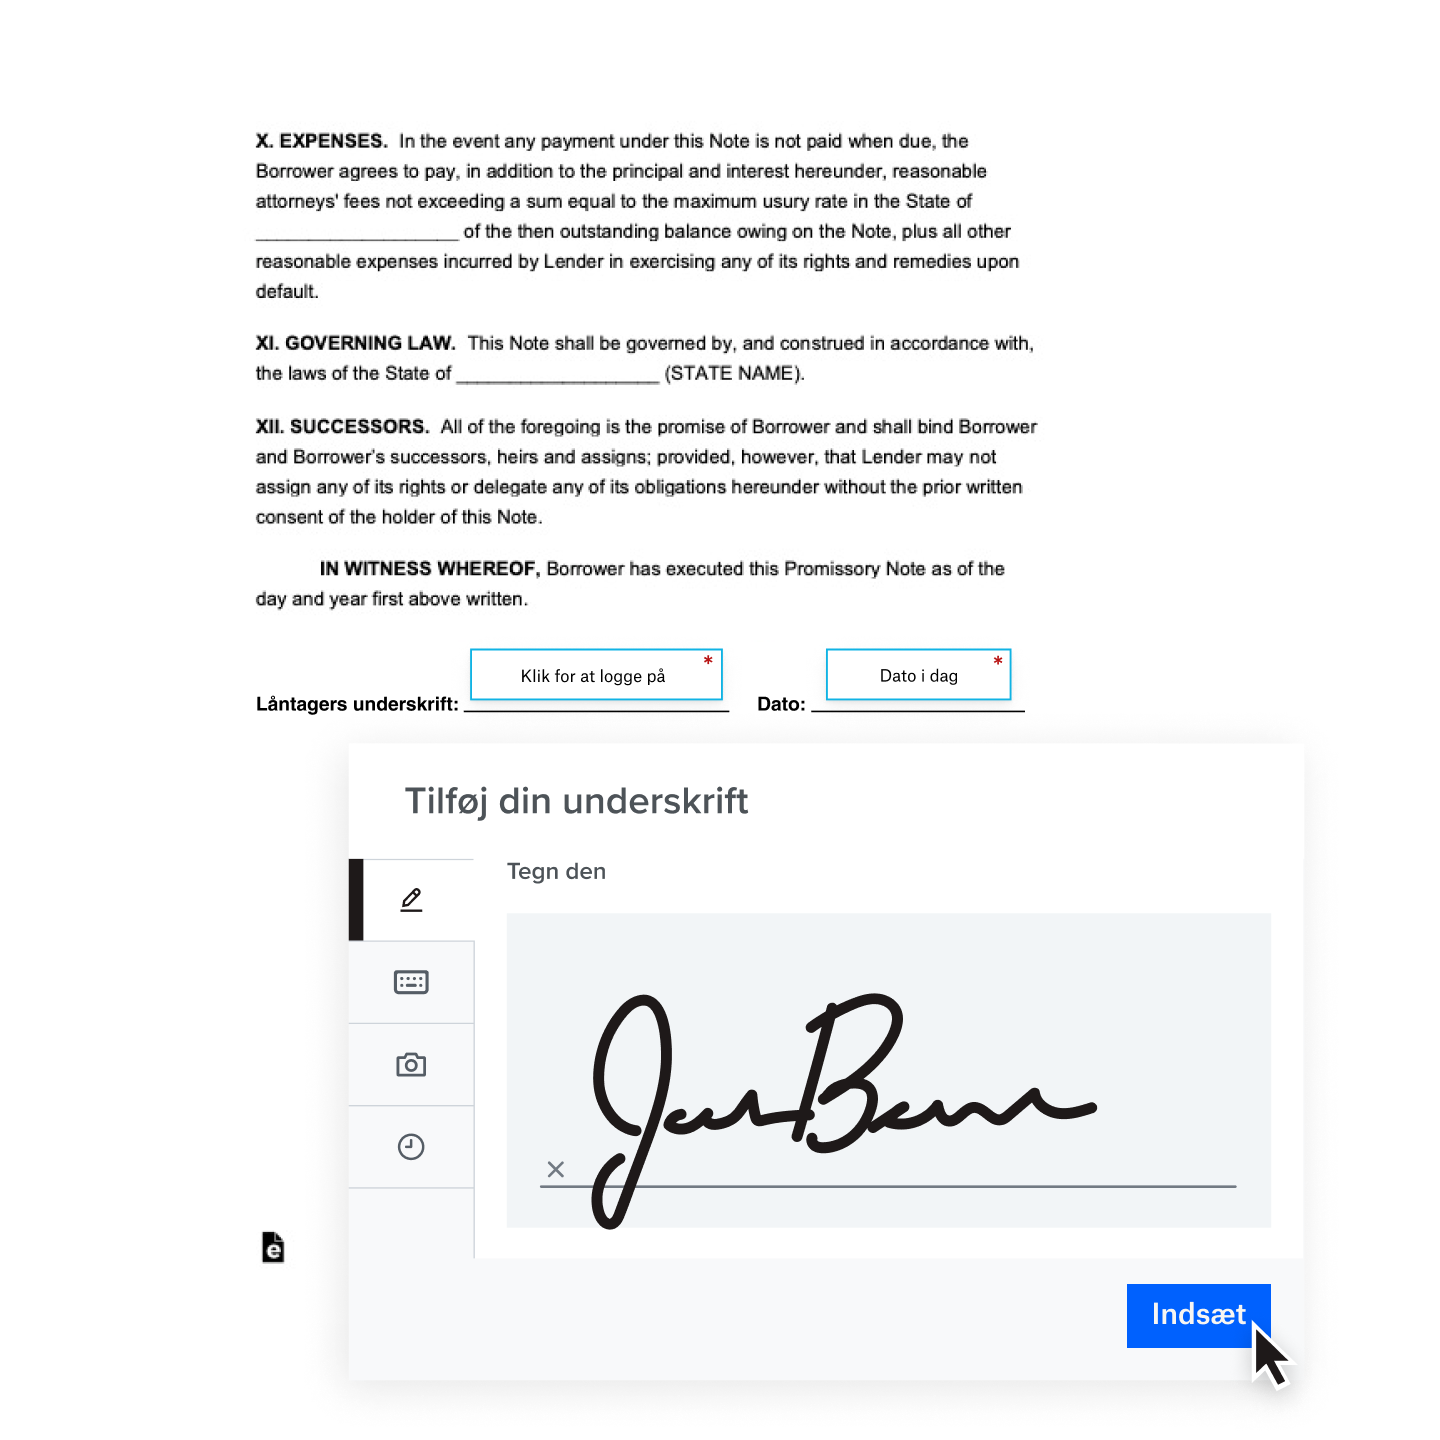 En håndskrevet digital underskrift føjes til en kontrakt